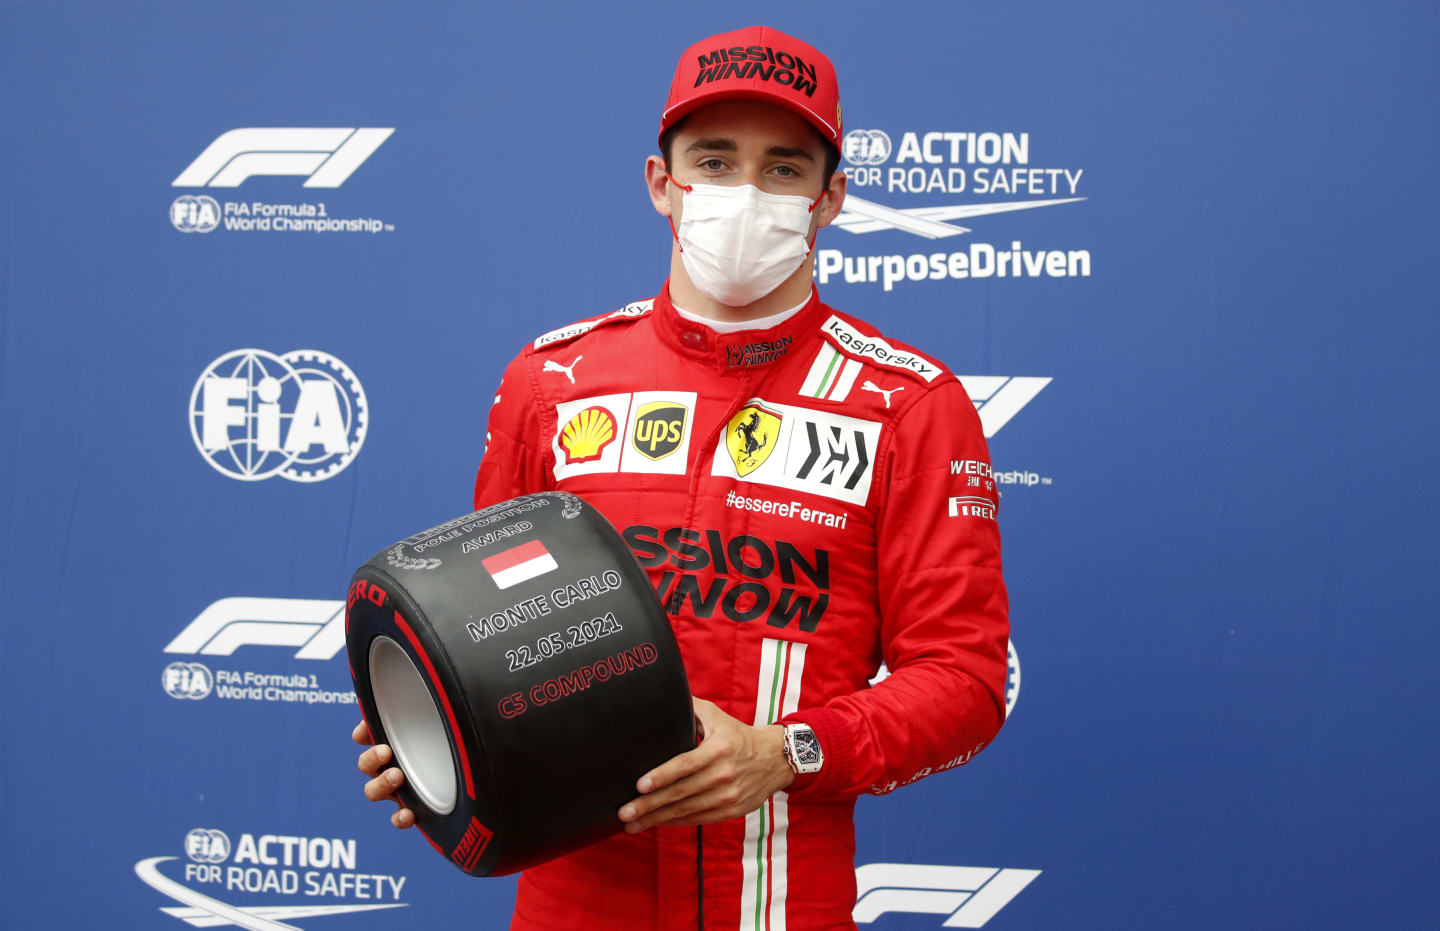 MONTE-CARLO, MONACO - MAY 22: Pole position qualifier Charles Leclerc of Monaco and Ferrari poses